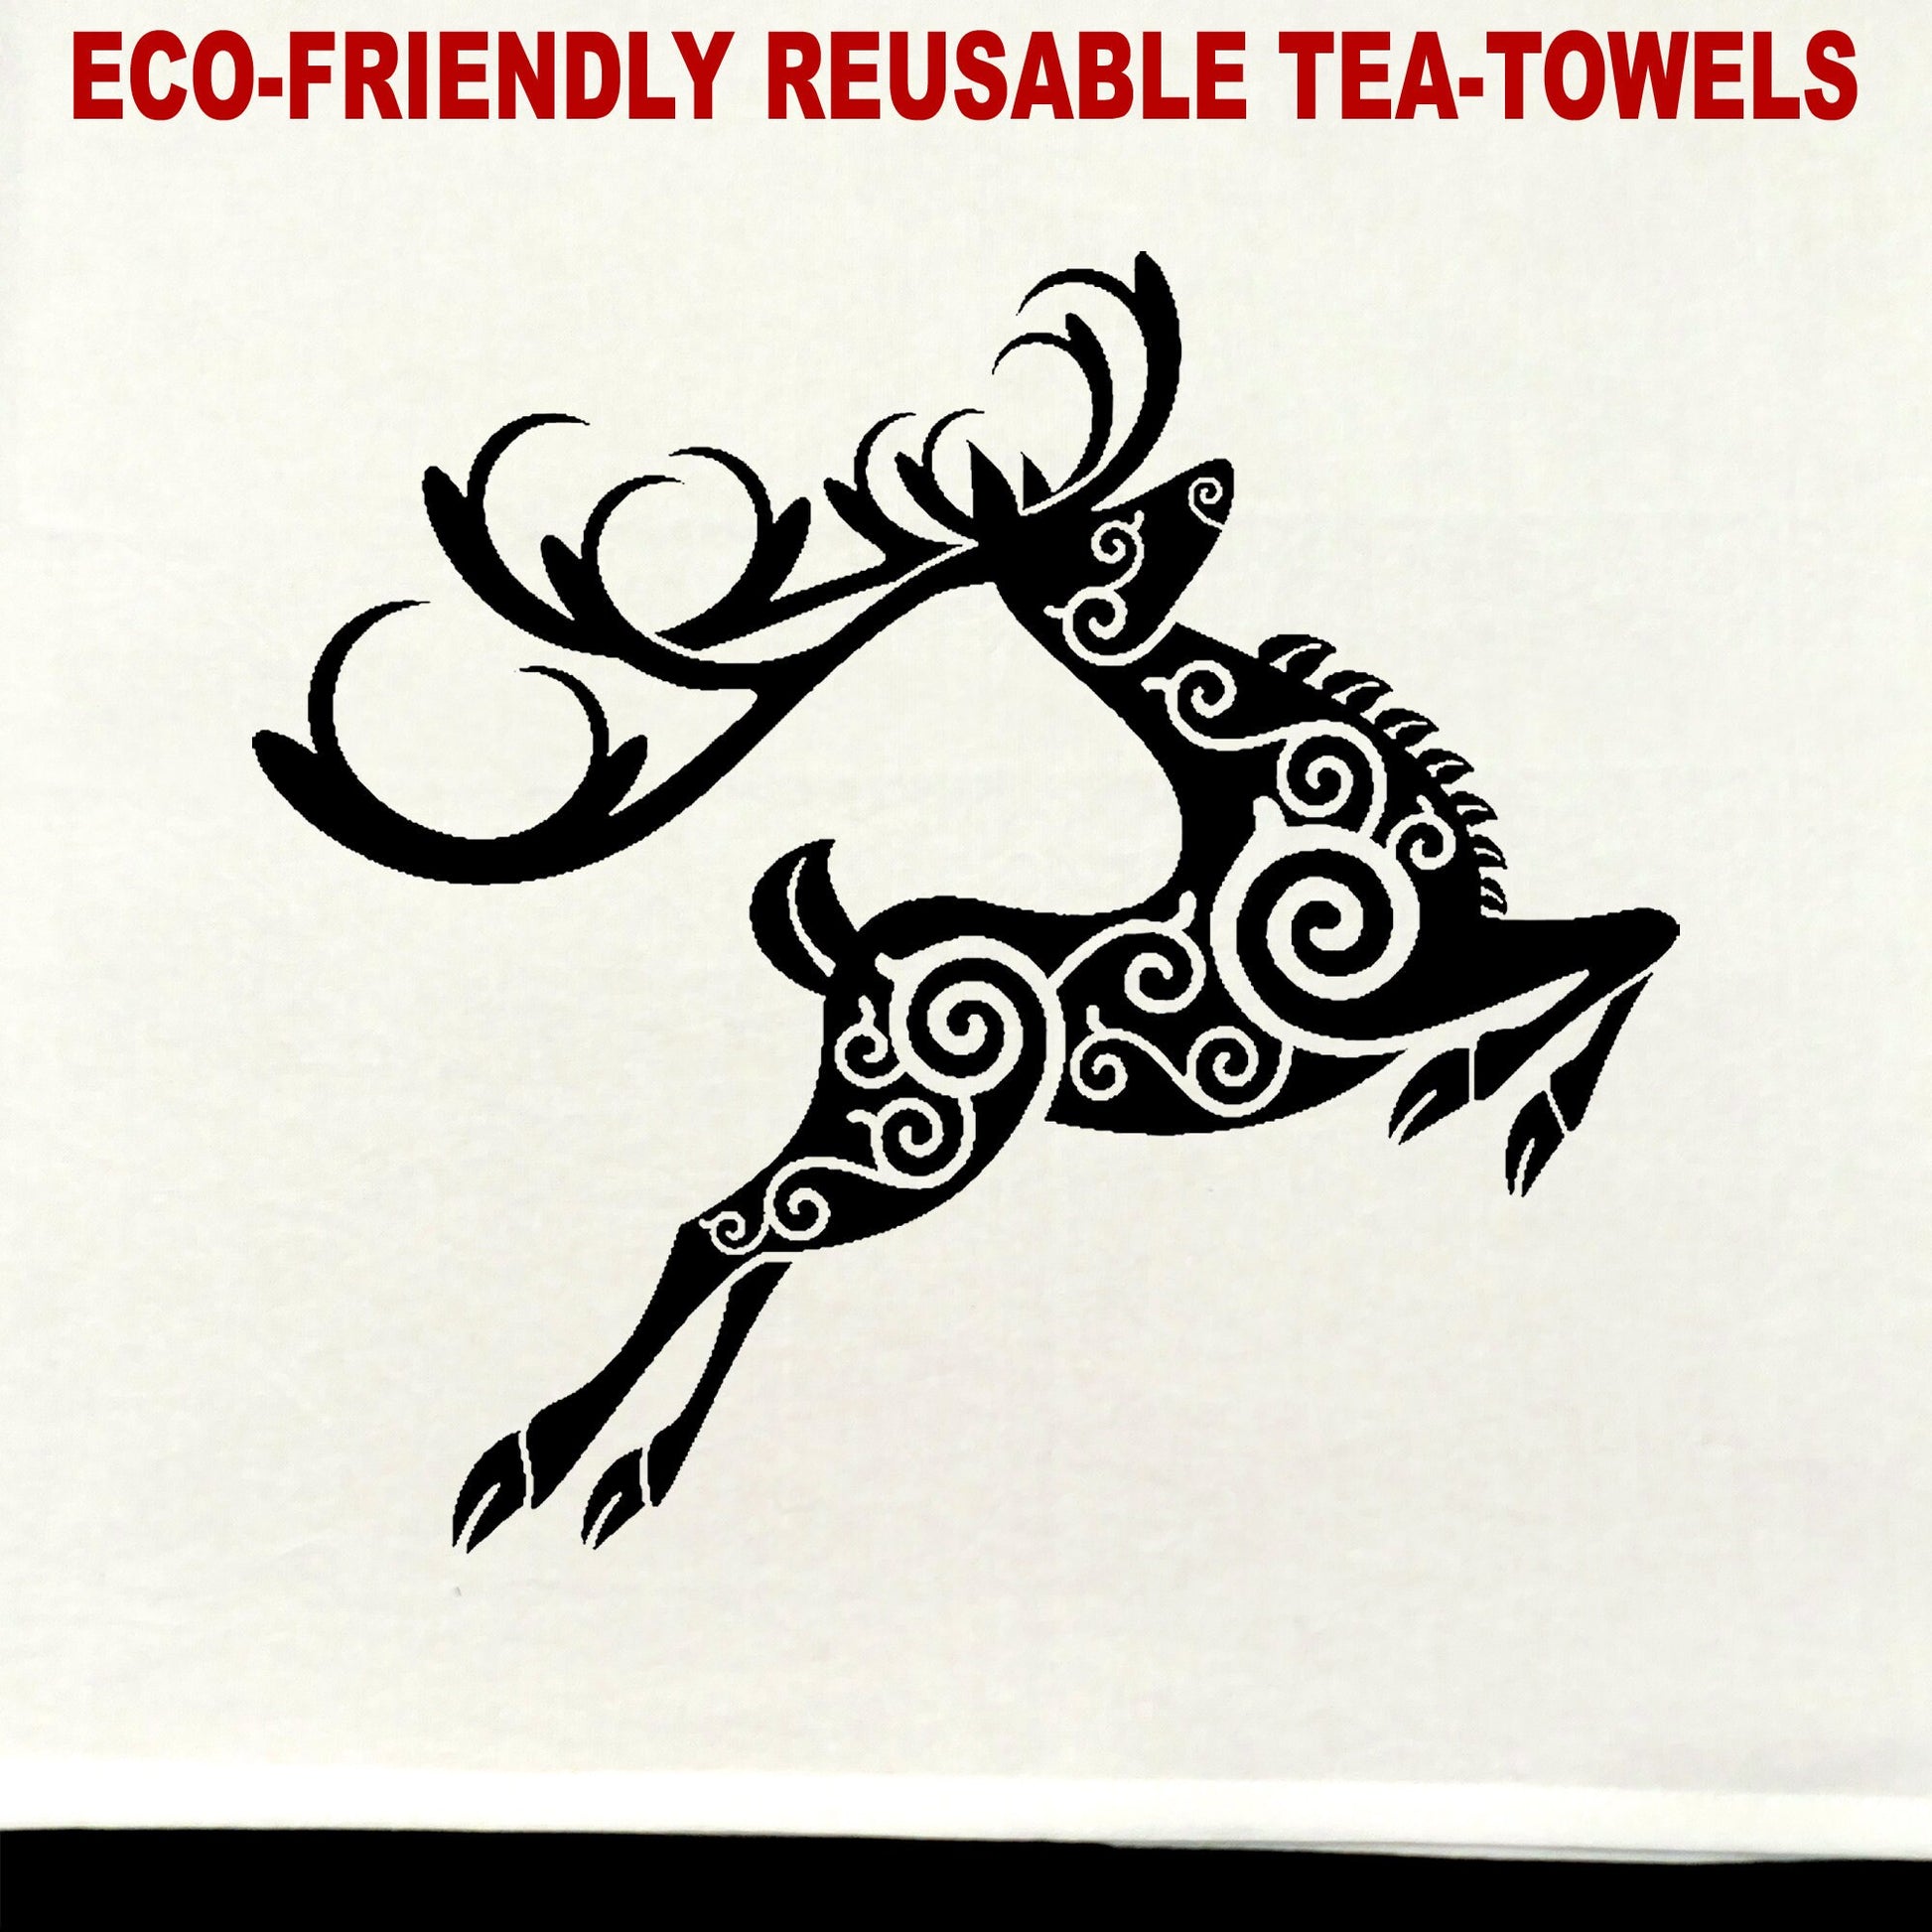 Celtic Stag Tea Towel / tea towel / dish towel / hand towel / reusable wipe / kitchen gift / kitchen deco